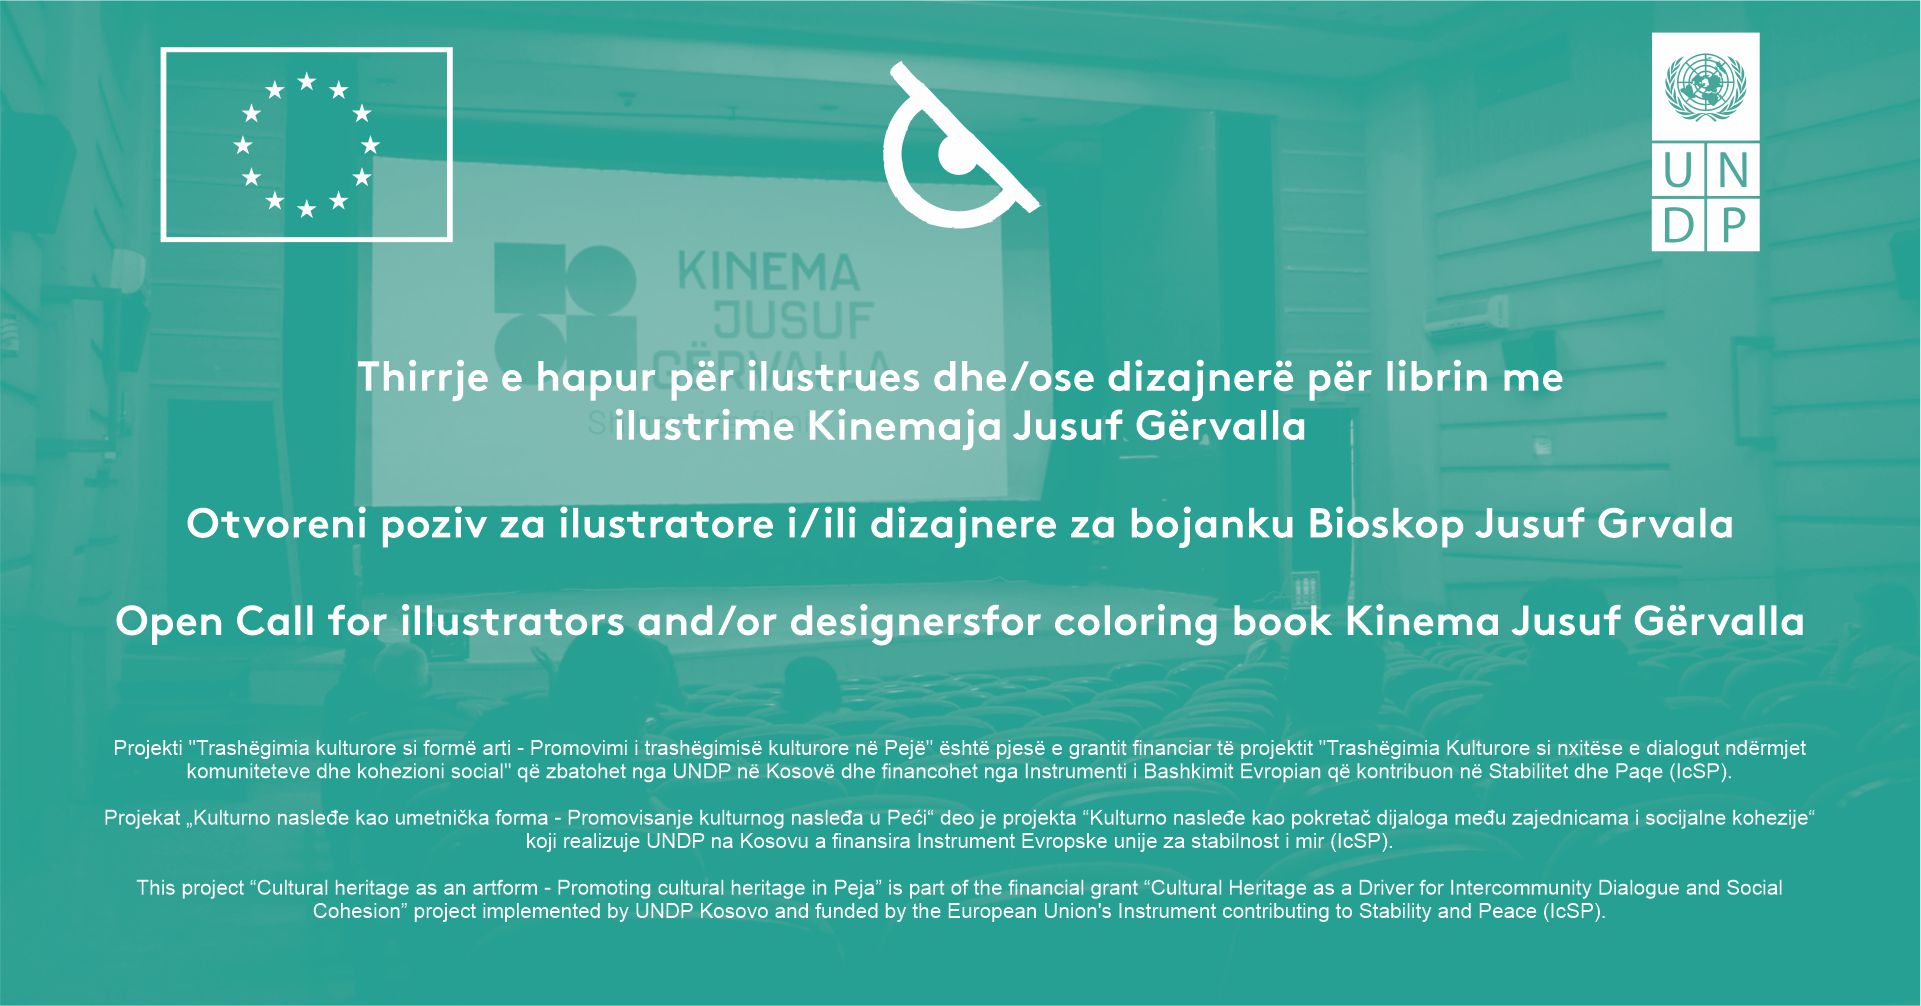 filosofía Mirar furtivamente ambulancia Open Call for illustrators and/or designers for coloring book Kinema Jusuf  Gërvalla - Anibar